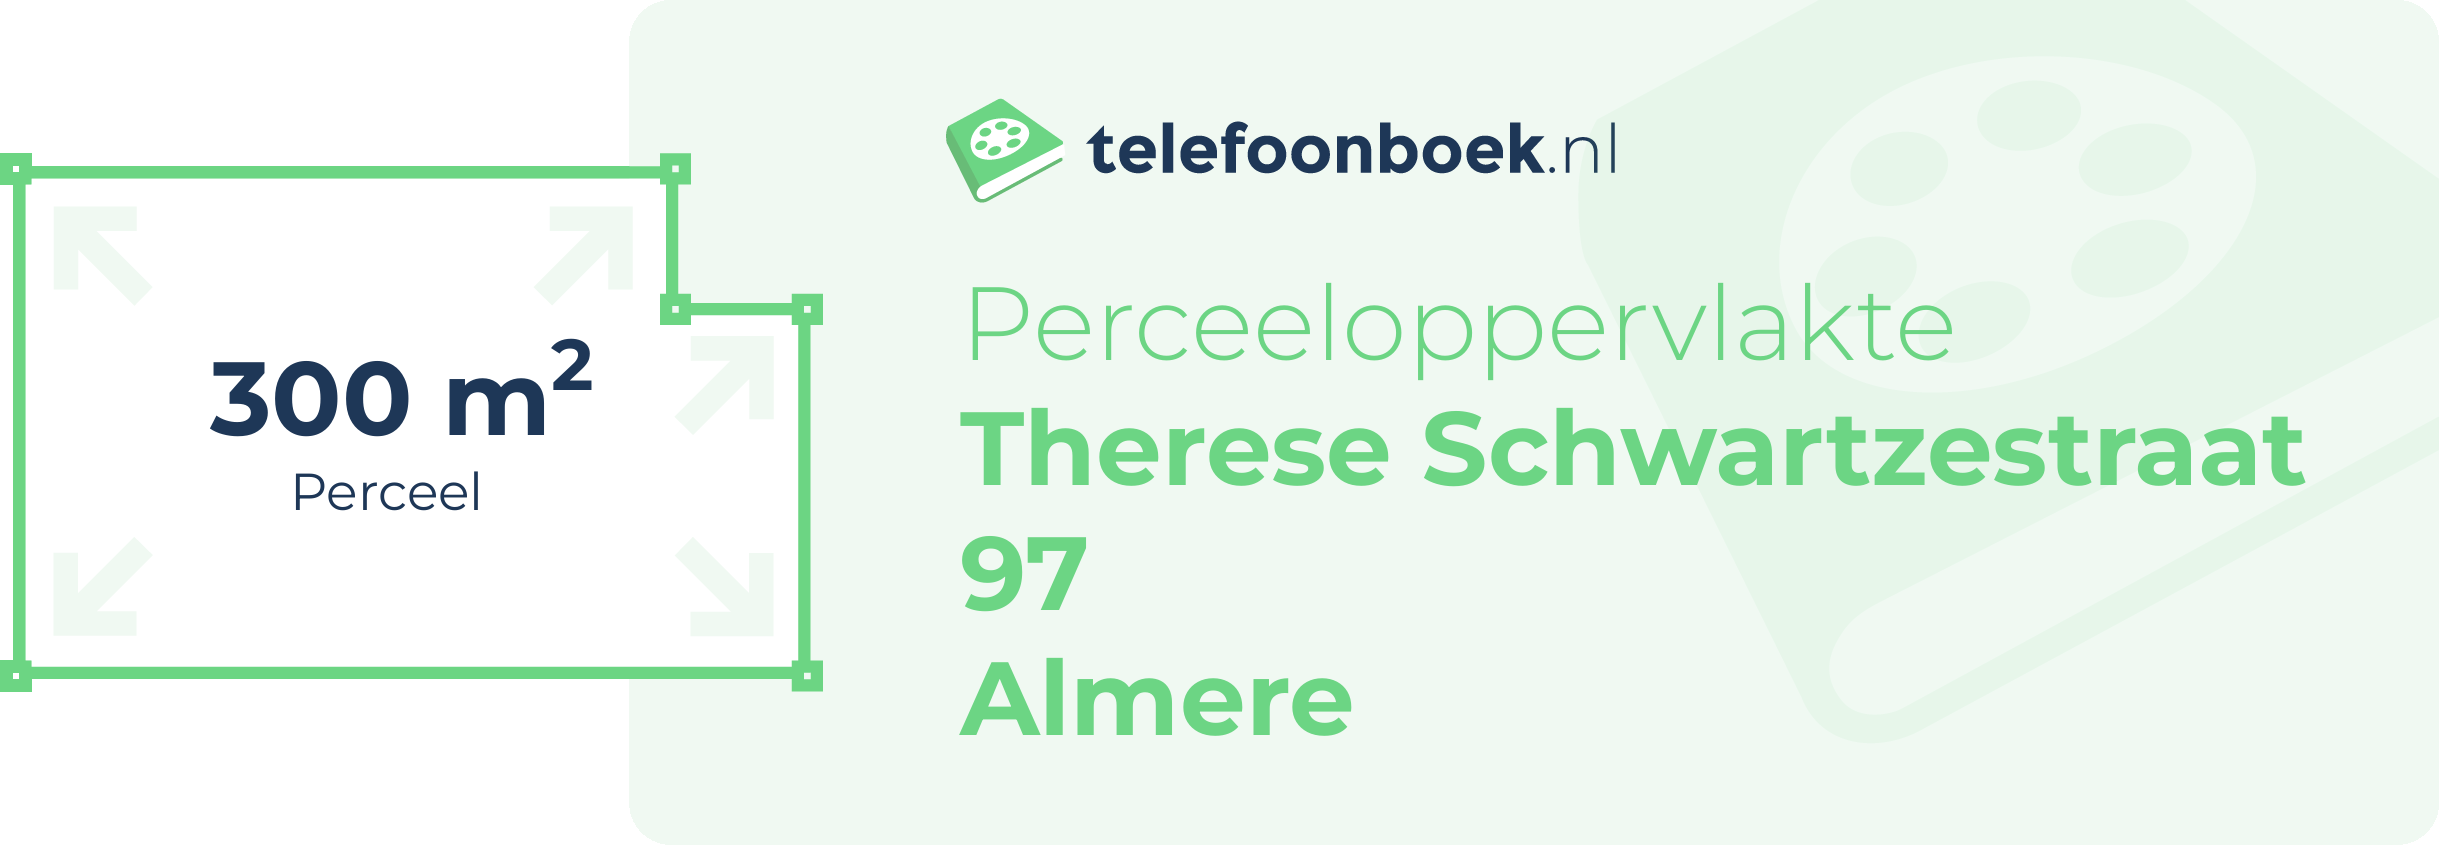 Perceeloppervlakte Therese Schwartzestraat 97 Almere